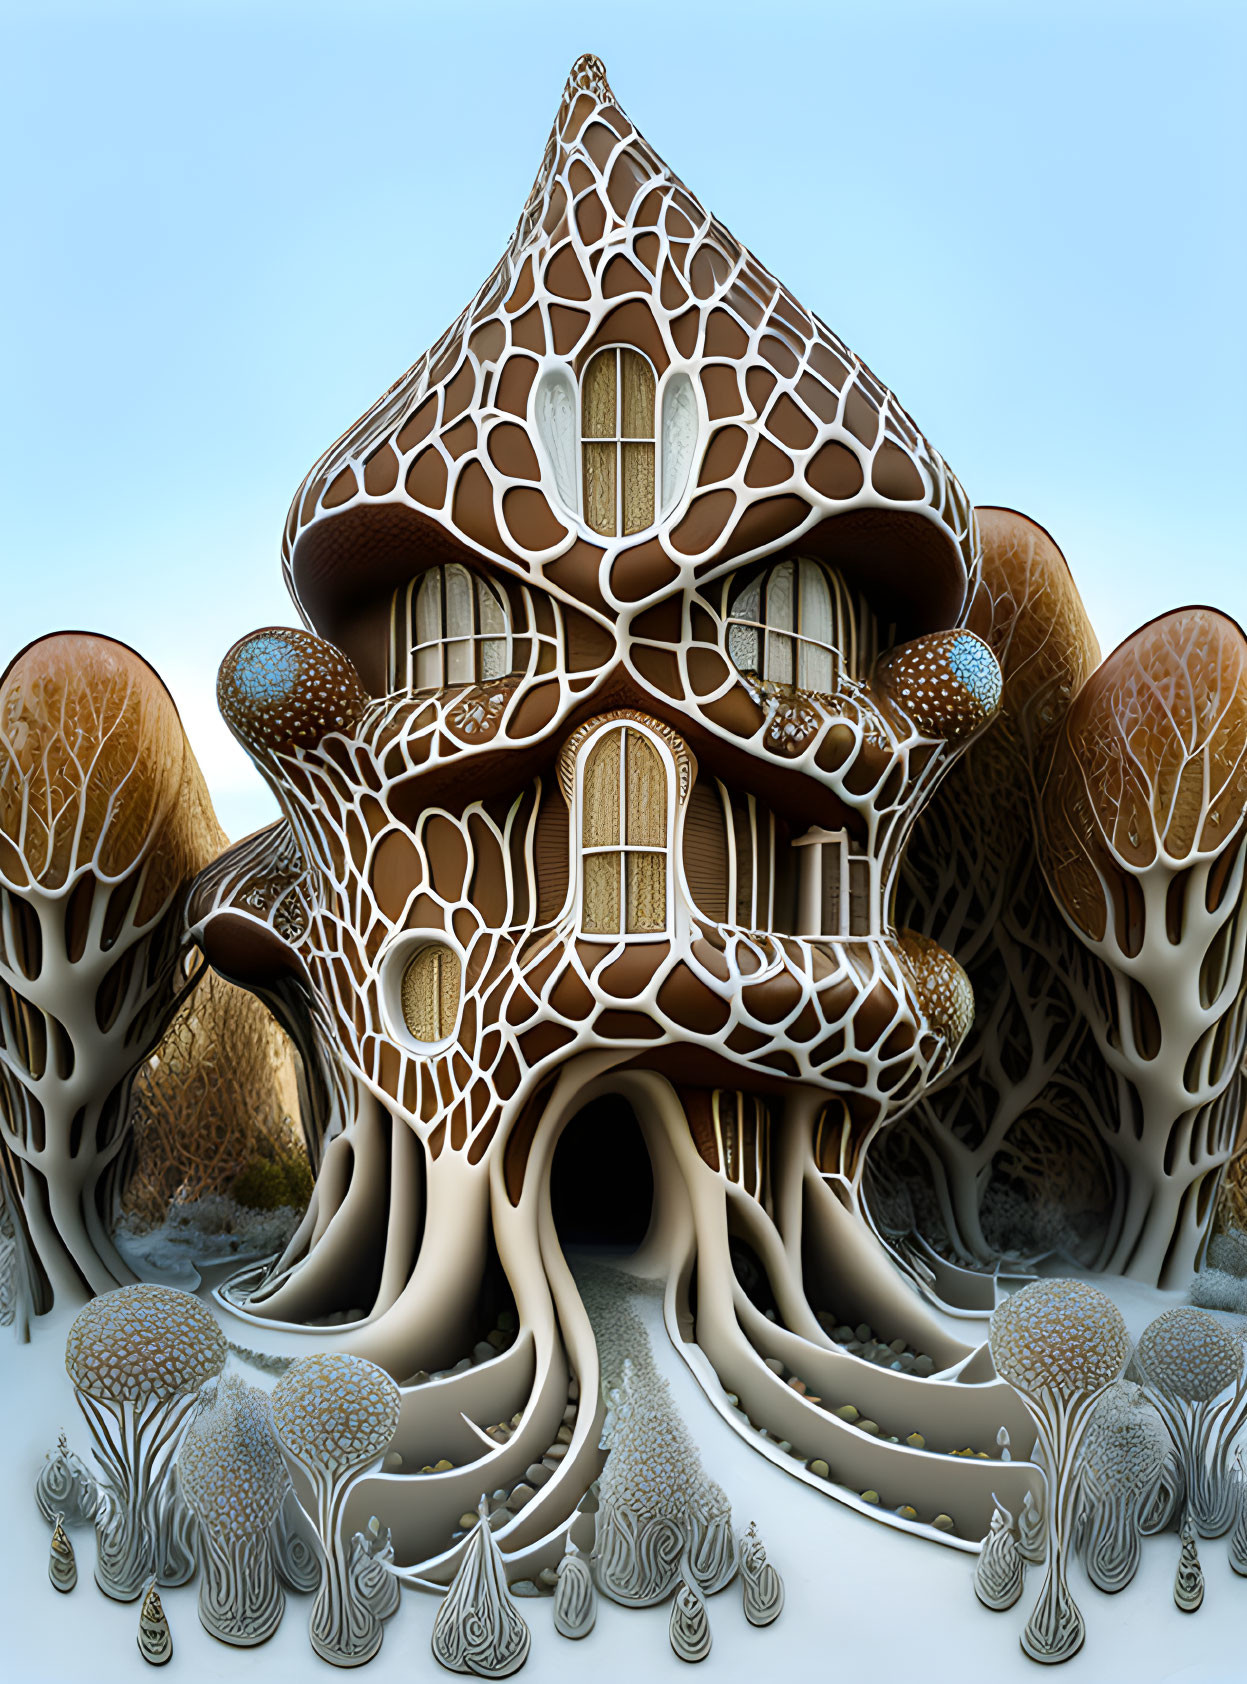 Organic Mushroom House Surrounded by Stylized Trees